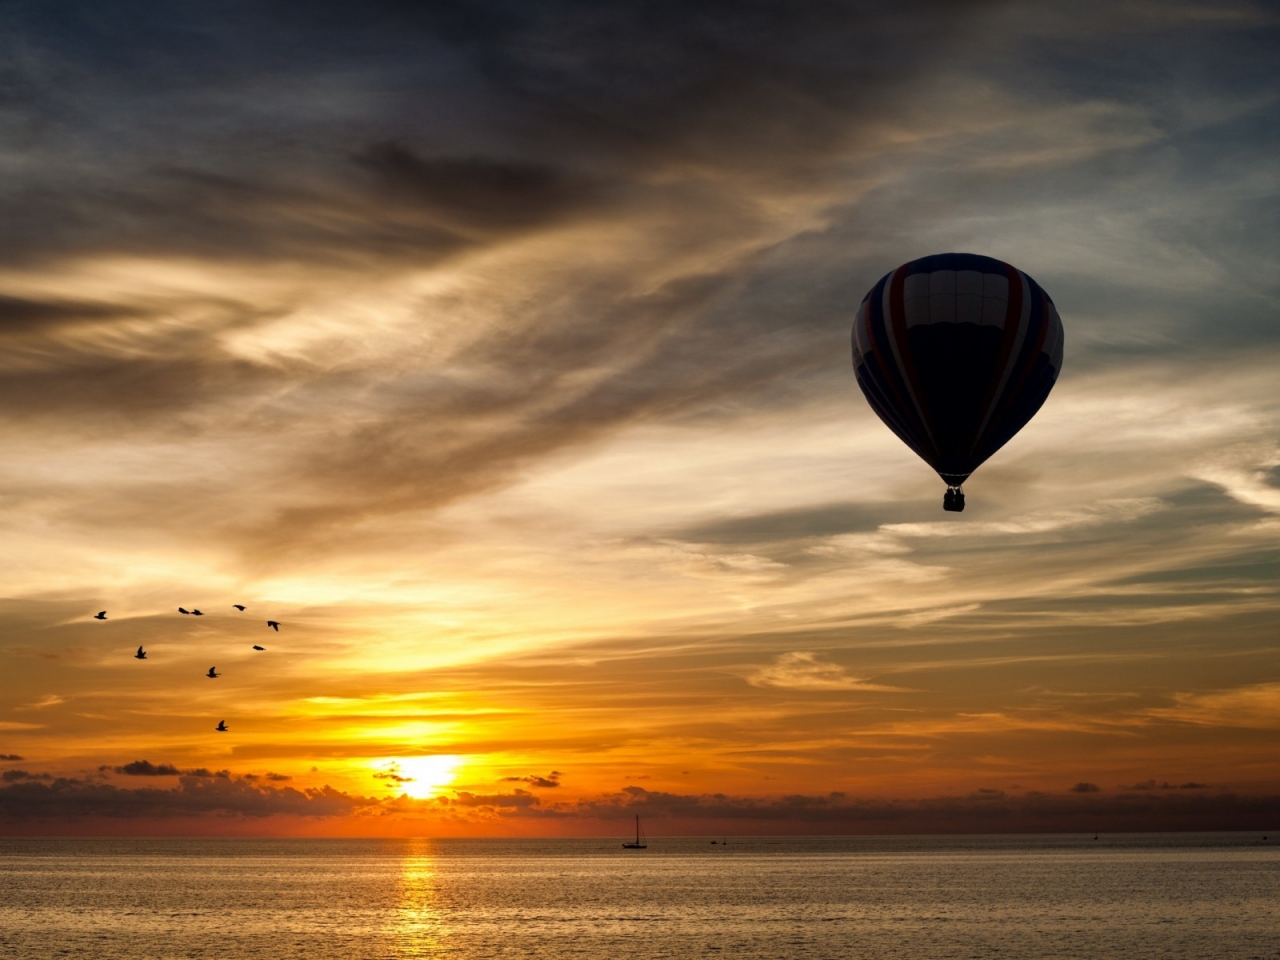 Balloon Towards Sunset for 1280 x 960 resolution